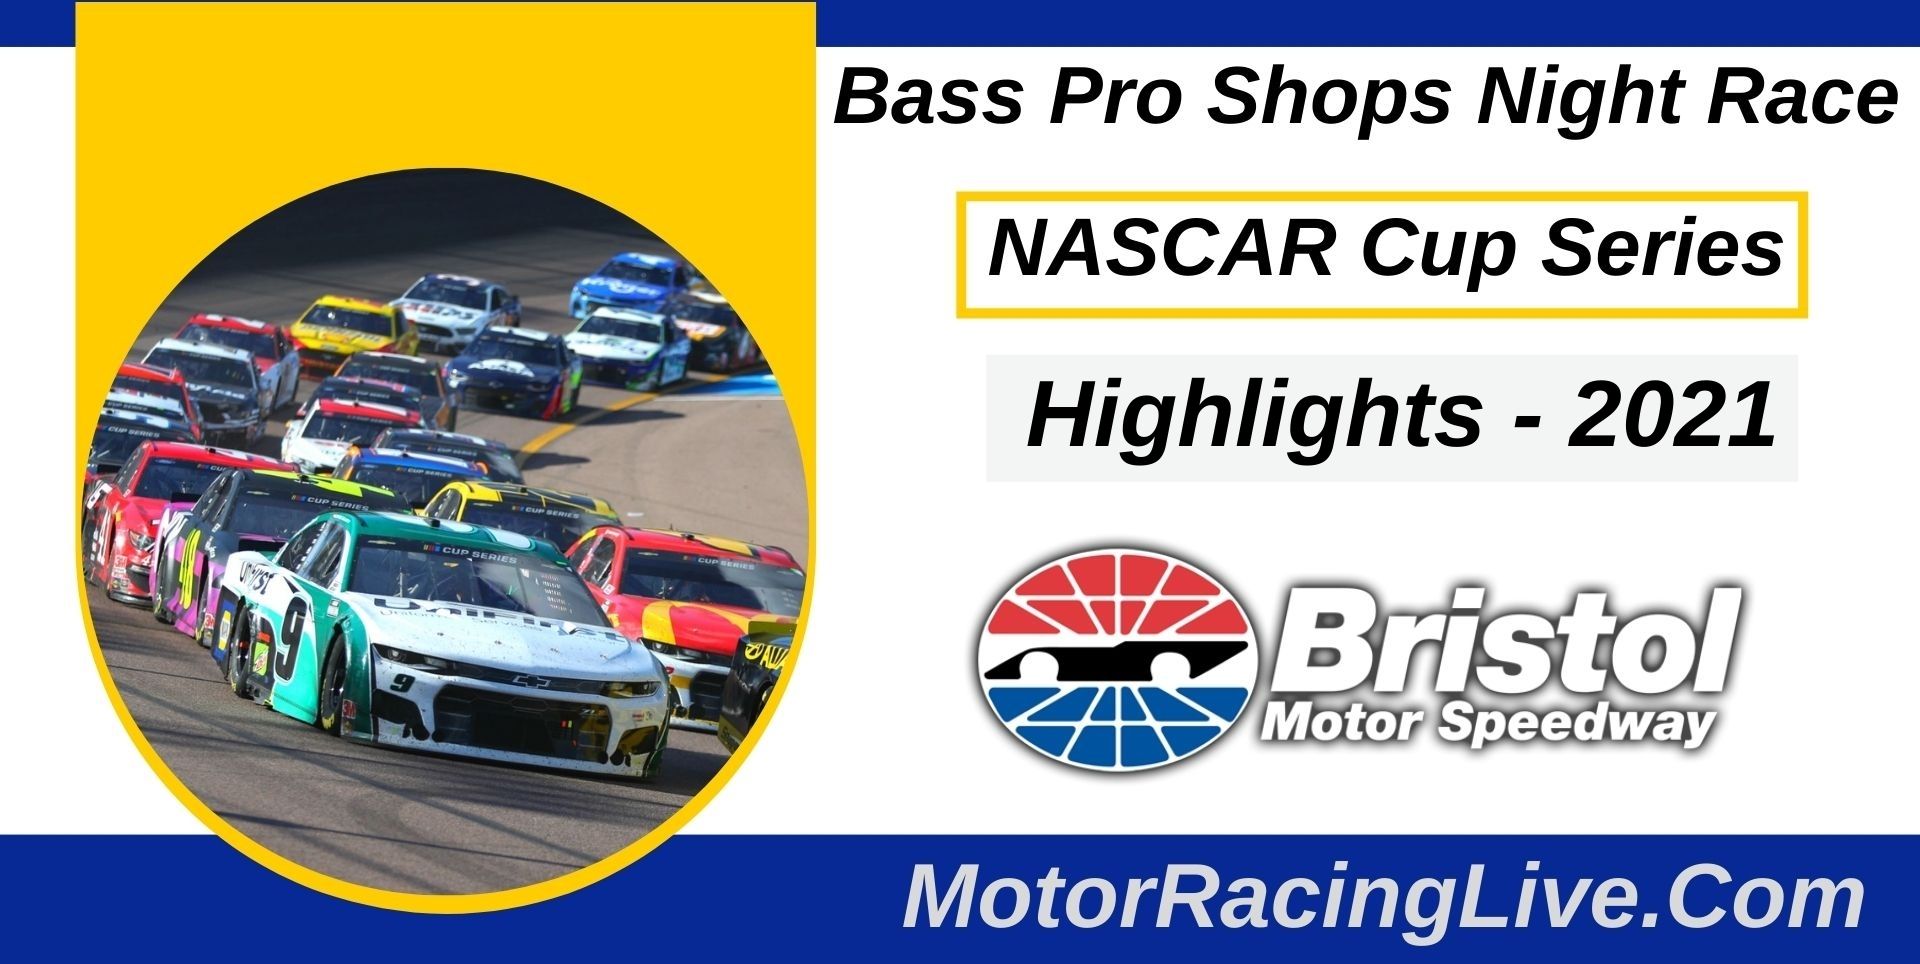 Bass Pro Shops Night Race Highlights 2021 NASCAR Cup